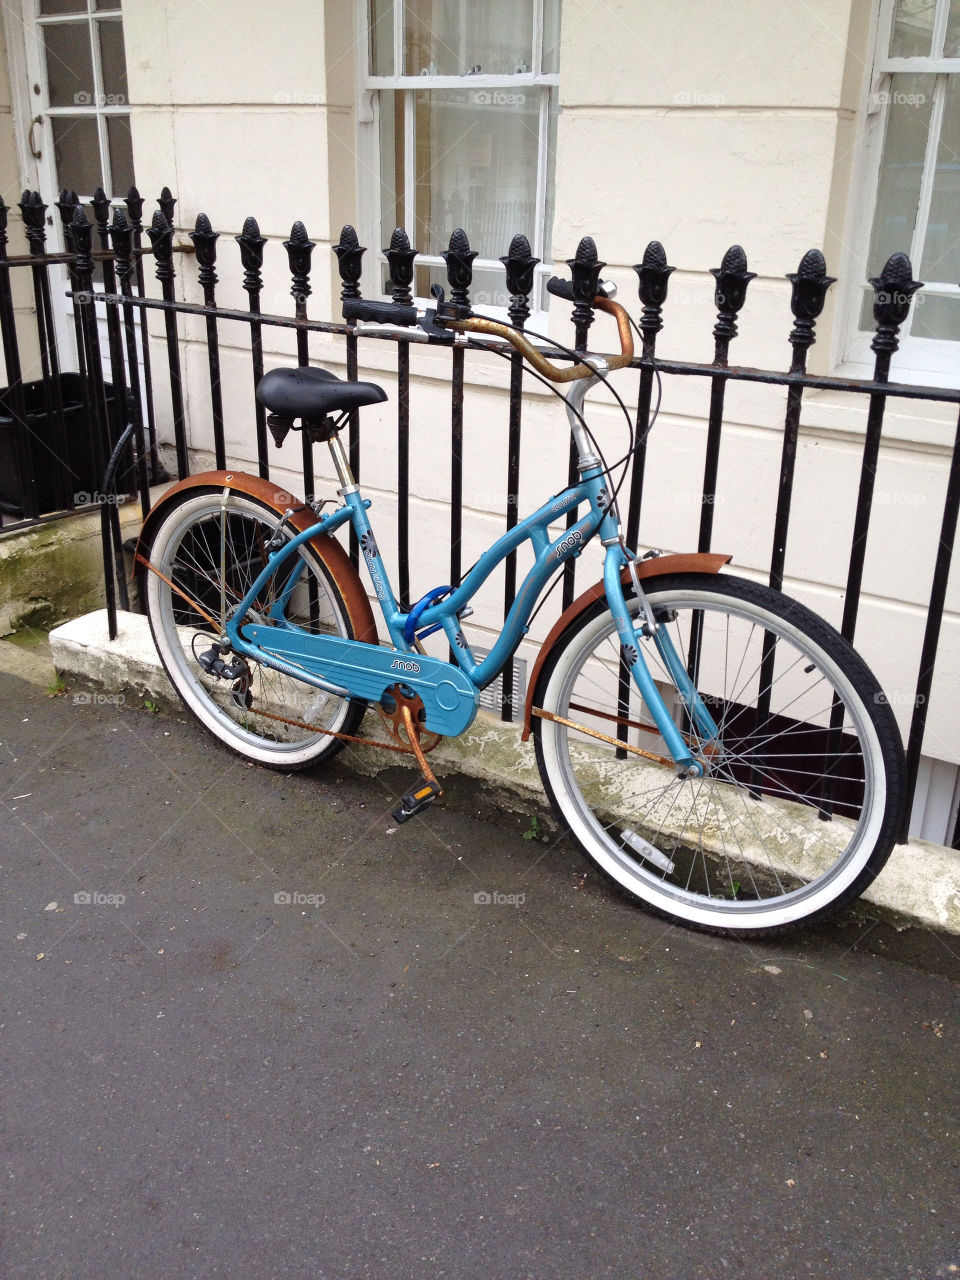 brighton bicycle blue bike by ShutterBug_NikonGirl